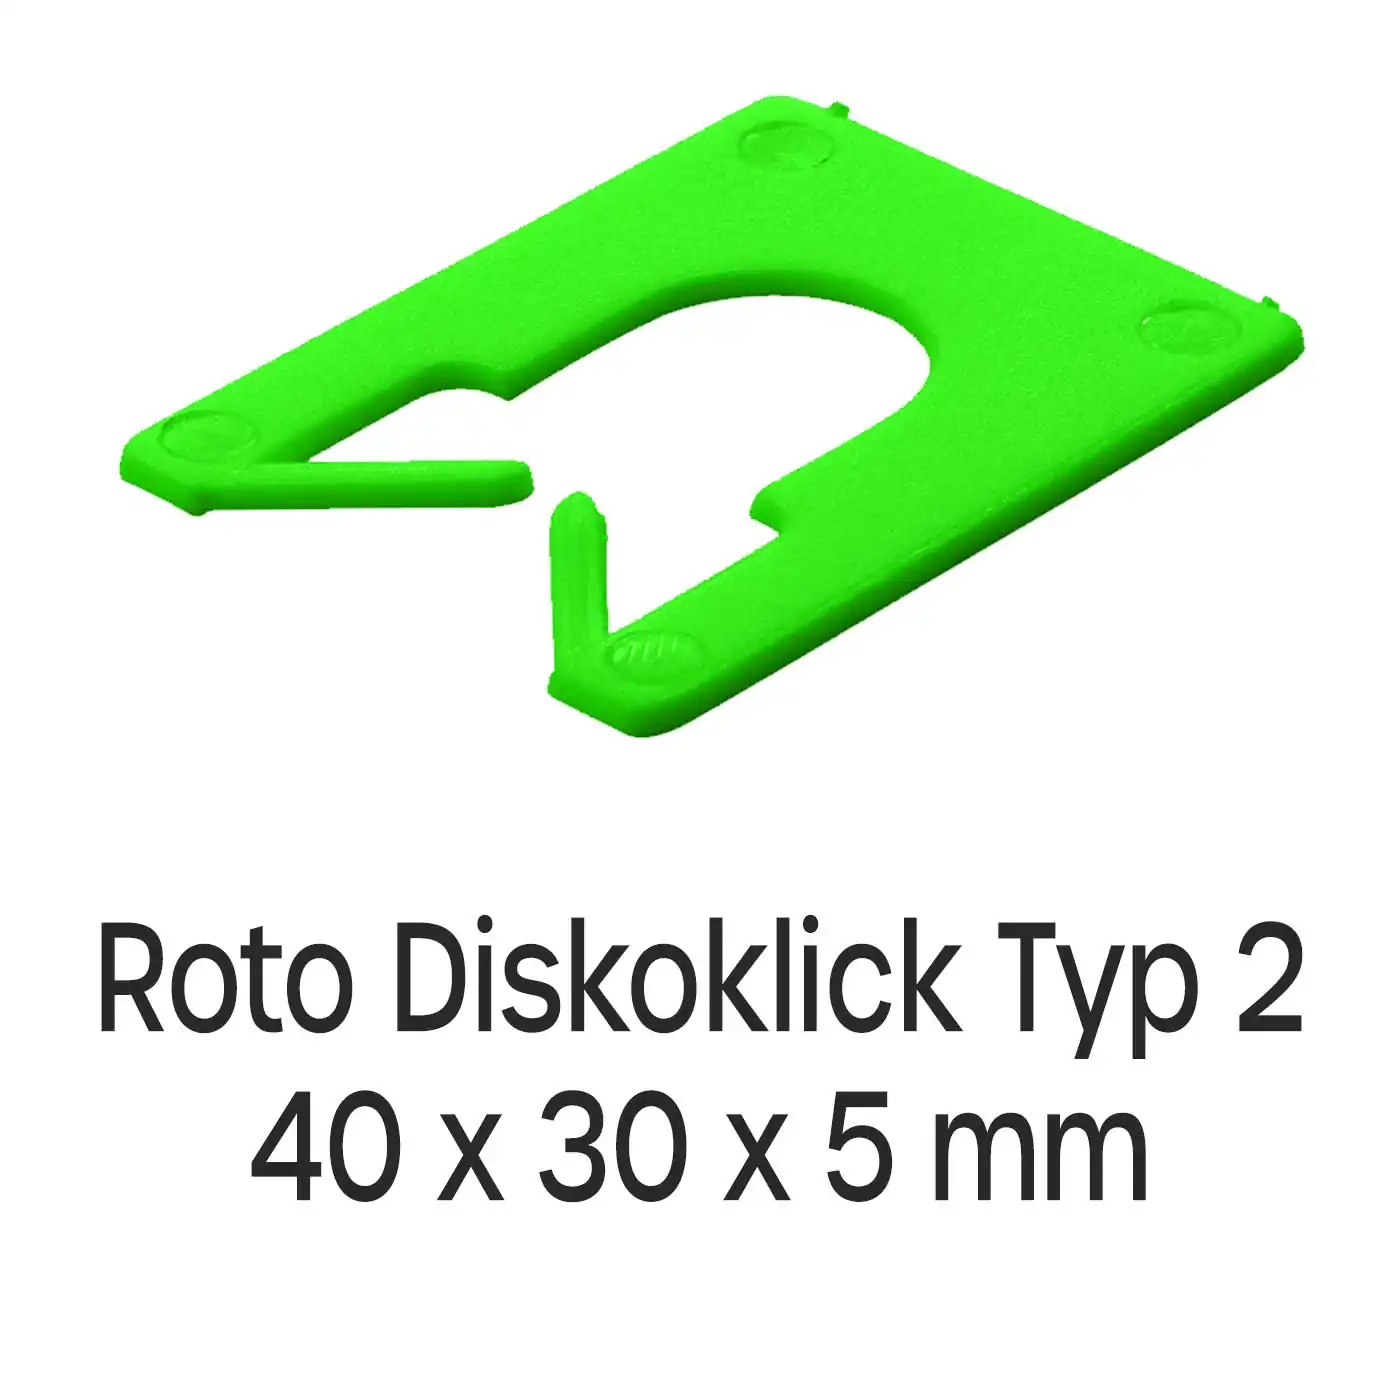 Distanzplatten Roto Diskoklick Typ 2 40 x 30 x 5 mm 1000 Stück